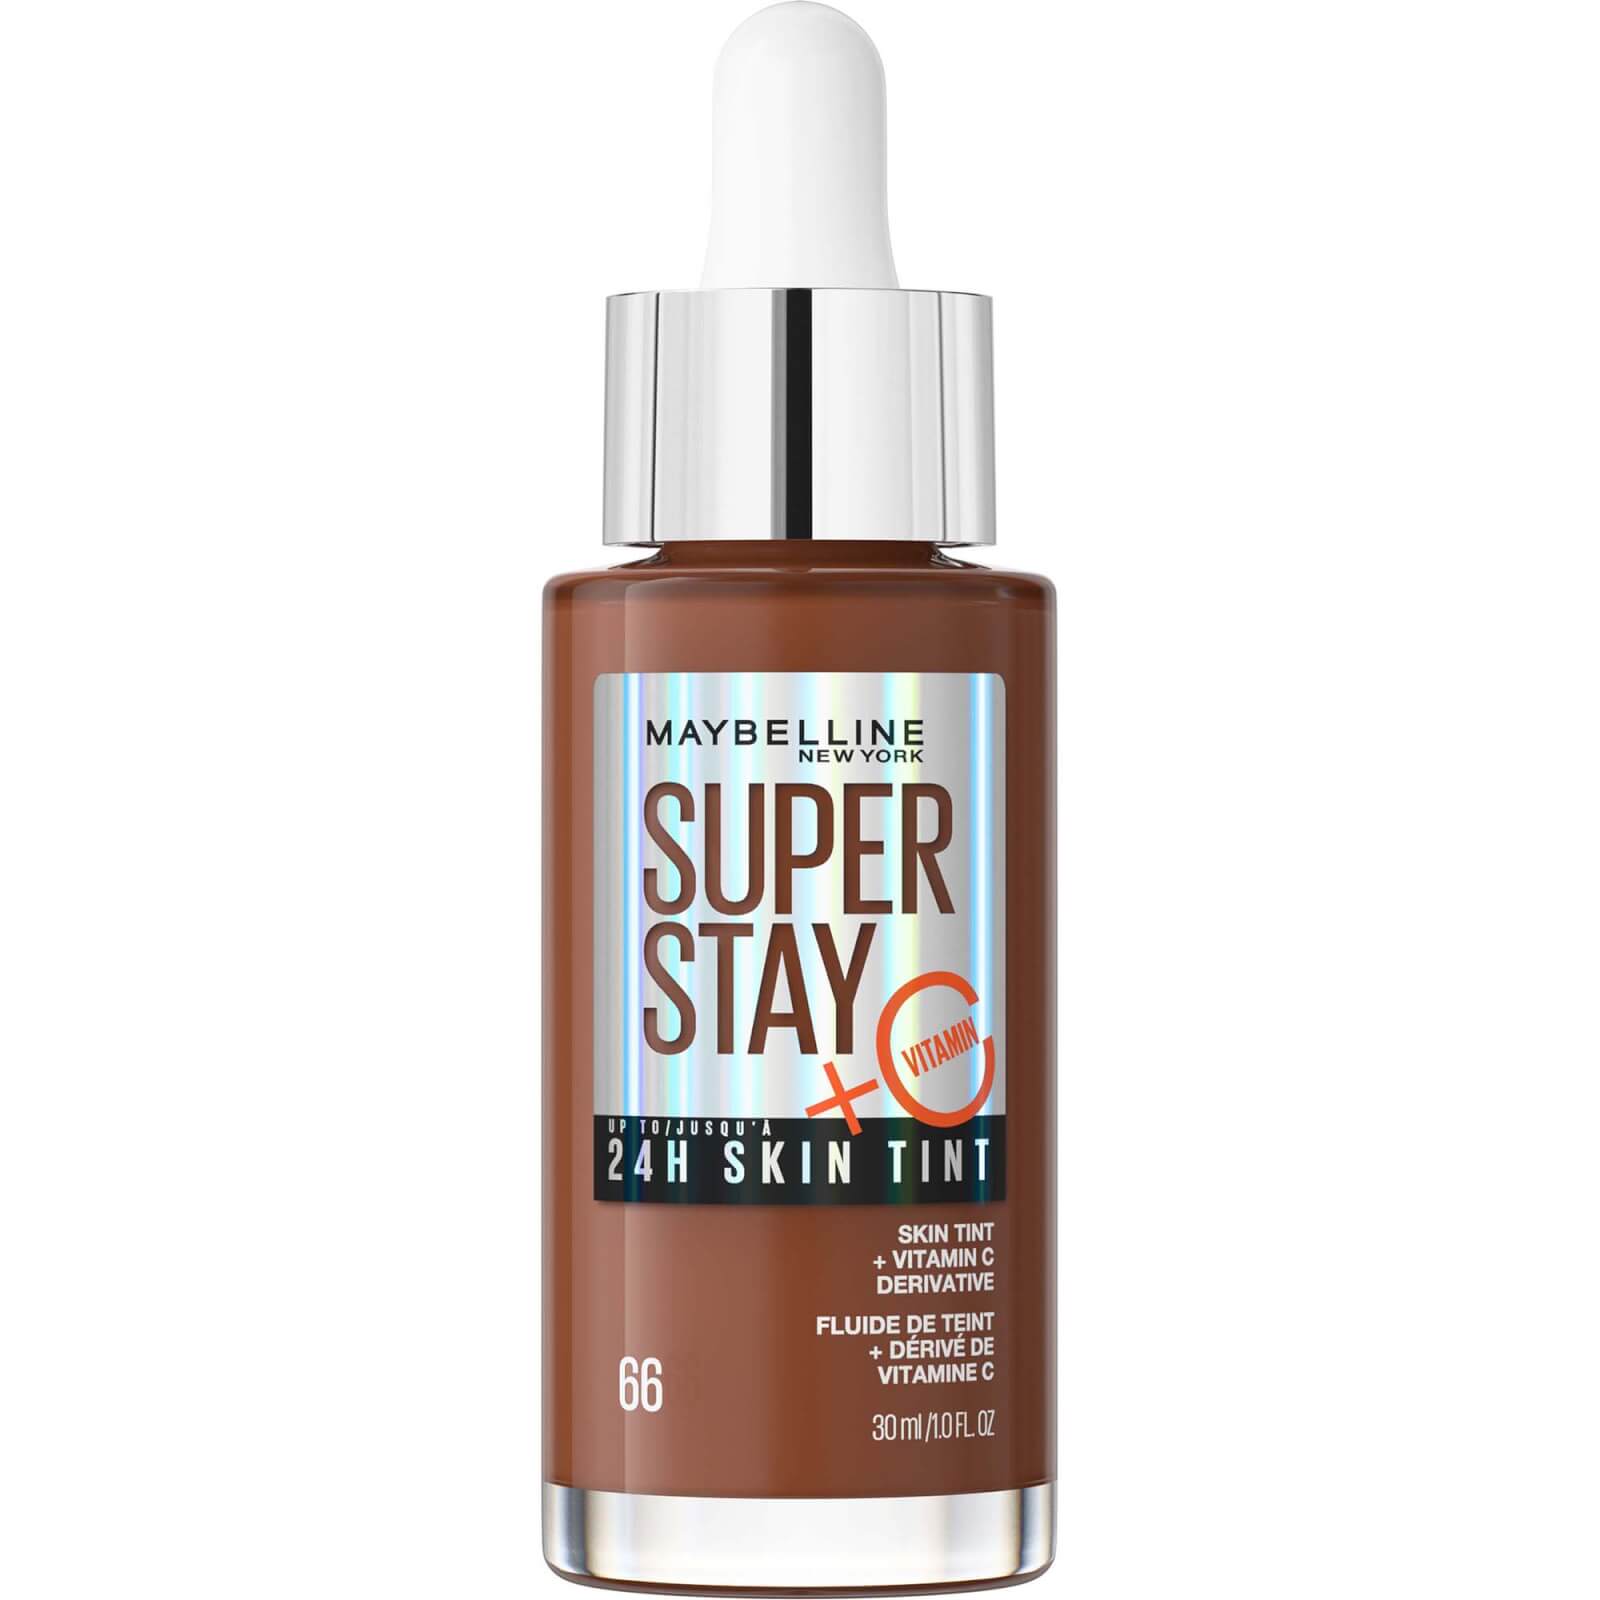 Photos - Foundation & Concealer Maybelline Super Stay up to 24H Skin Tint Foundation + Vitamin C 30ml (Var 